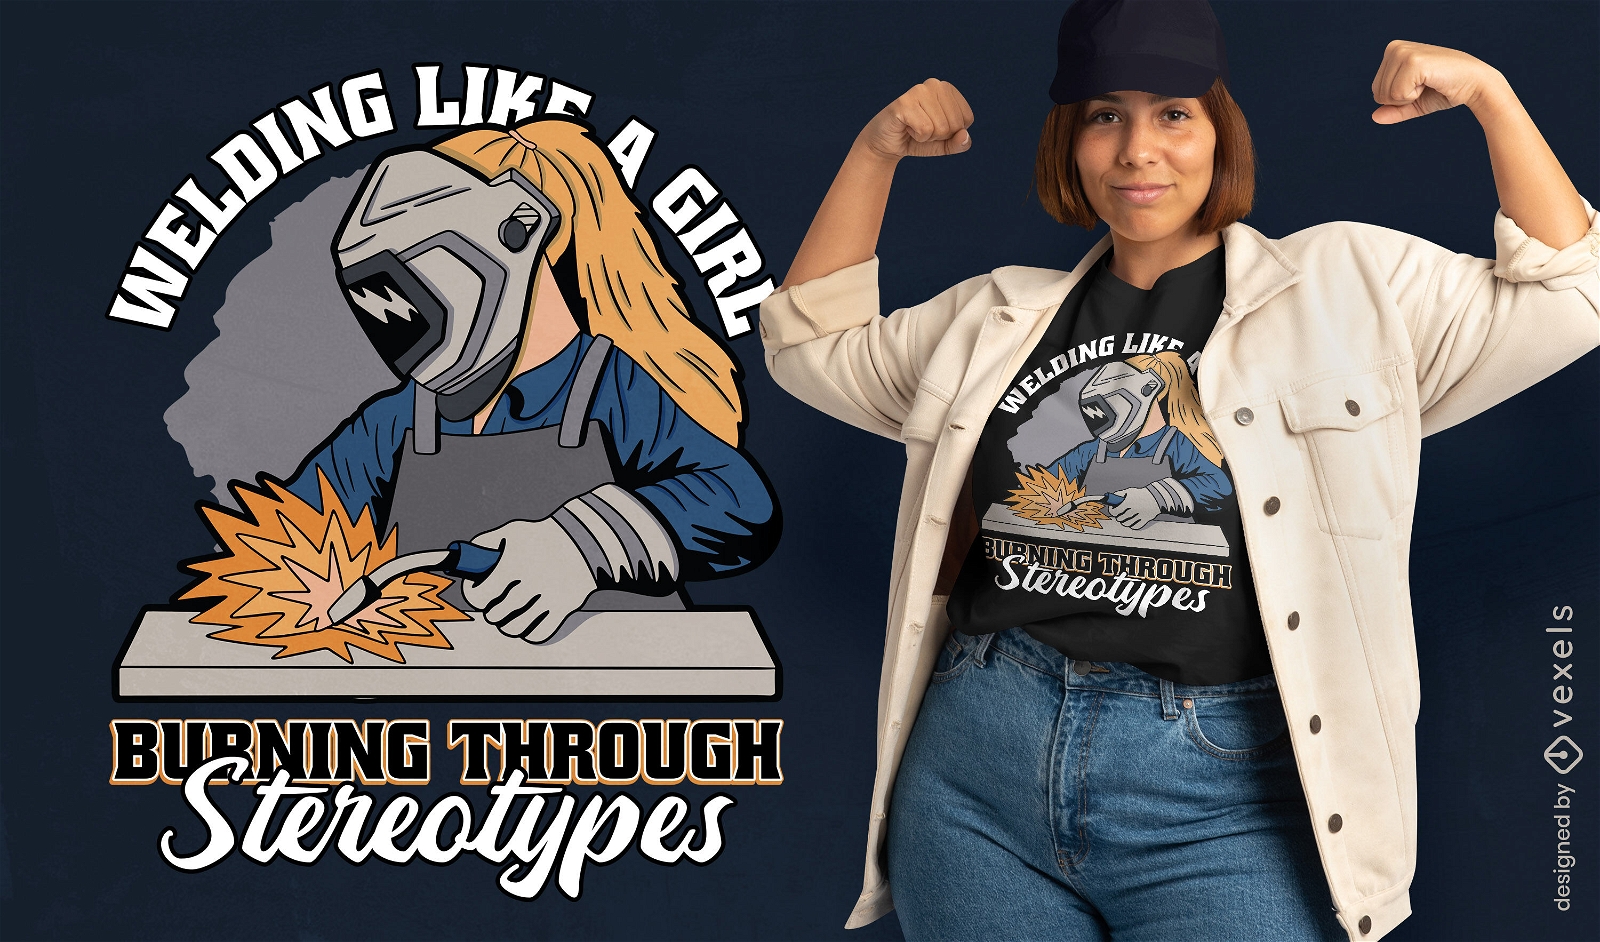  Woman welder quote t-shirt design